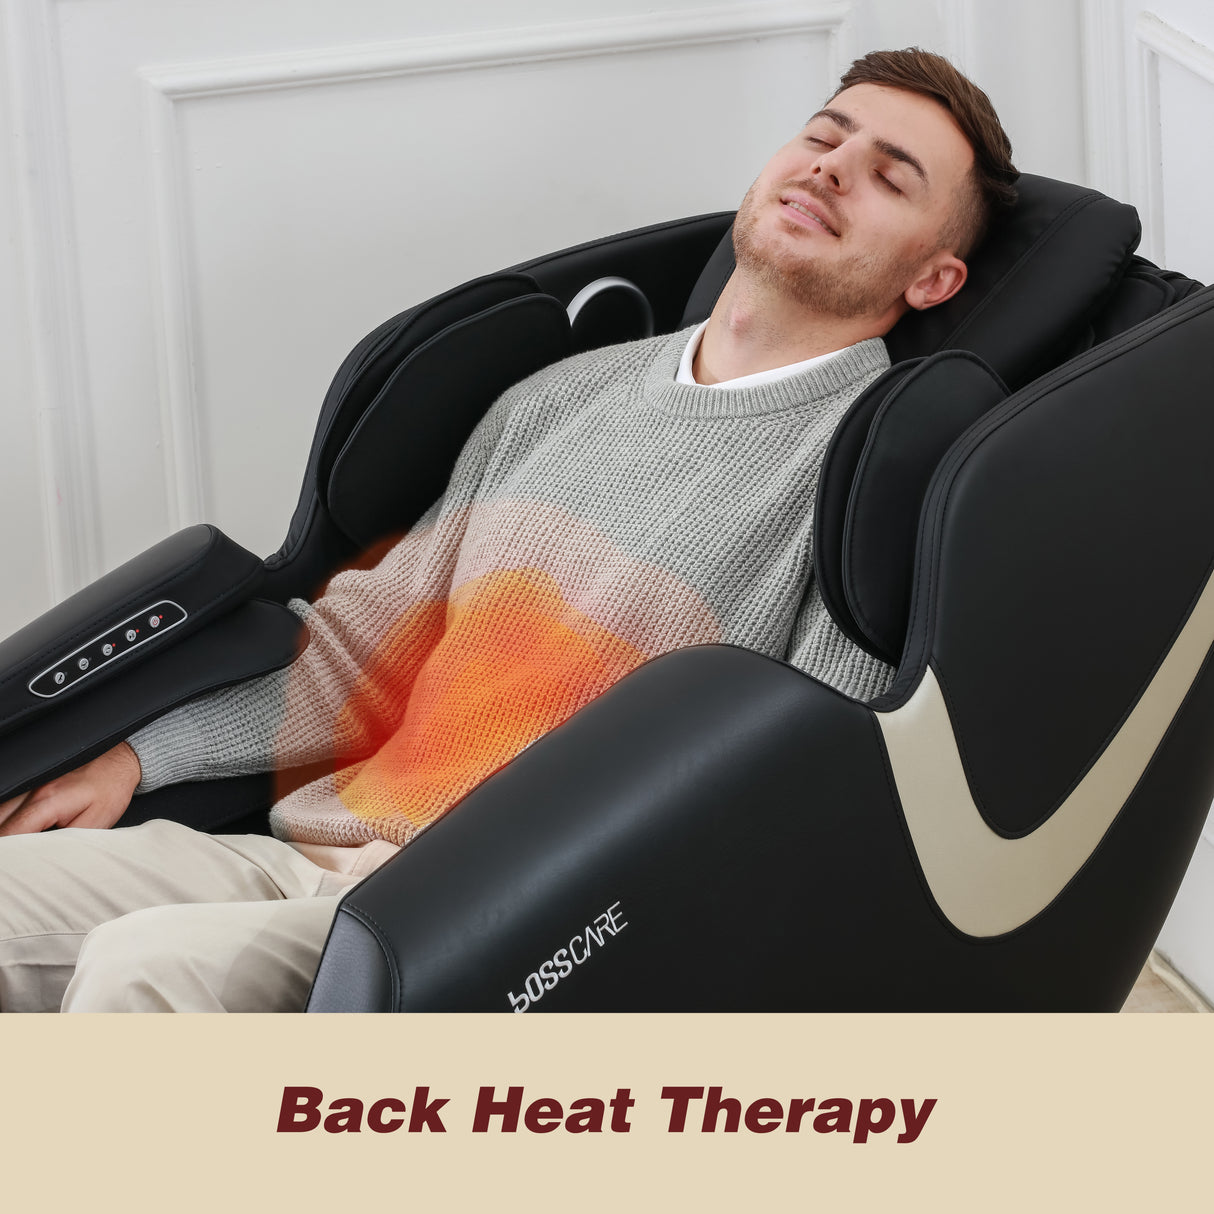 BOSSCARE Massage Chair Recliner with Zero Gravity Airbag Massage Bluetooth Speaker Foot Roller Black Home Elegance USA